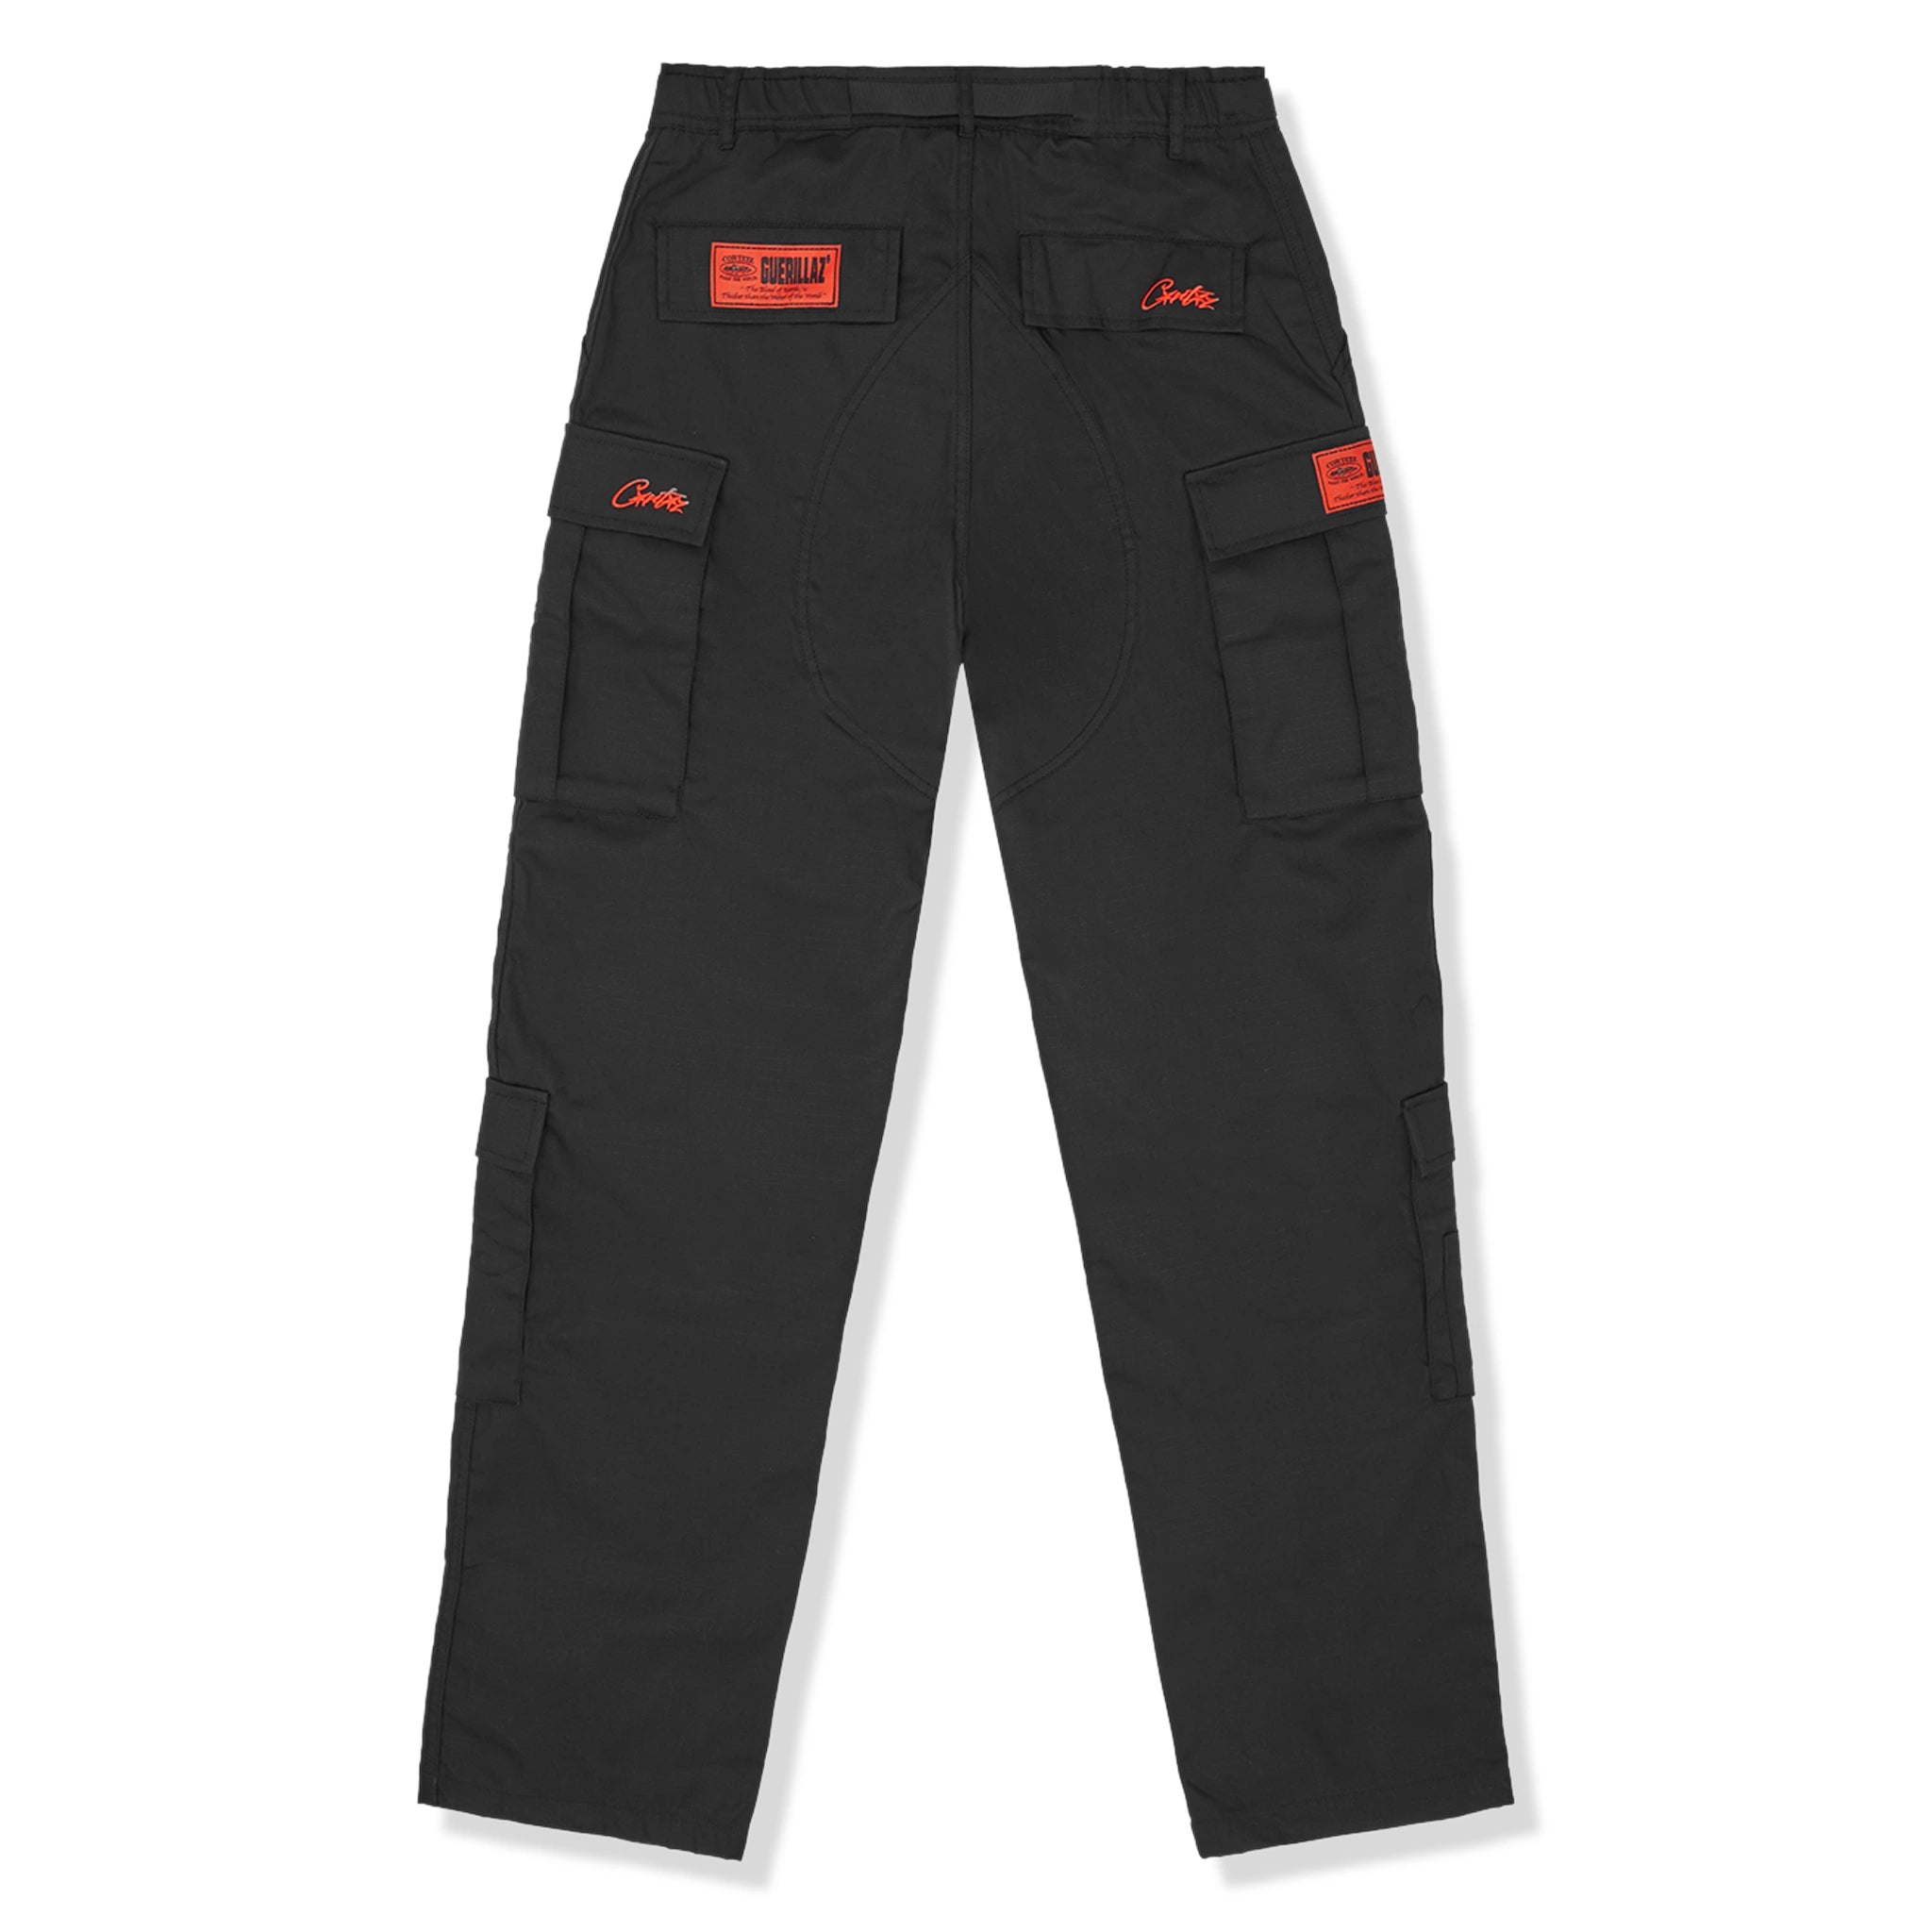 Back view of Corteiz Guerillaz Black Red Cargo Pants